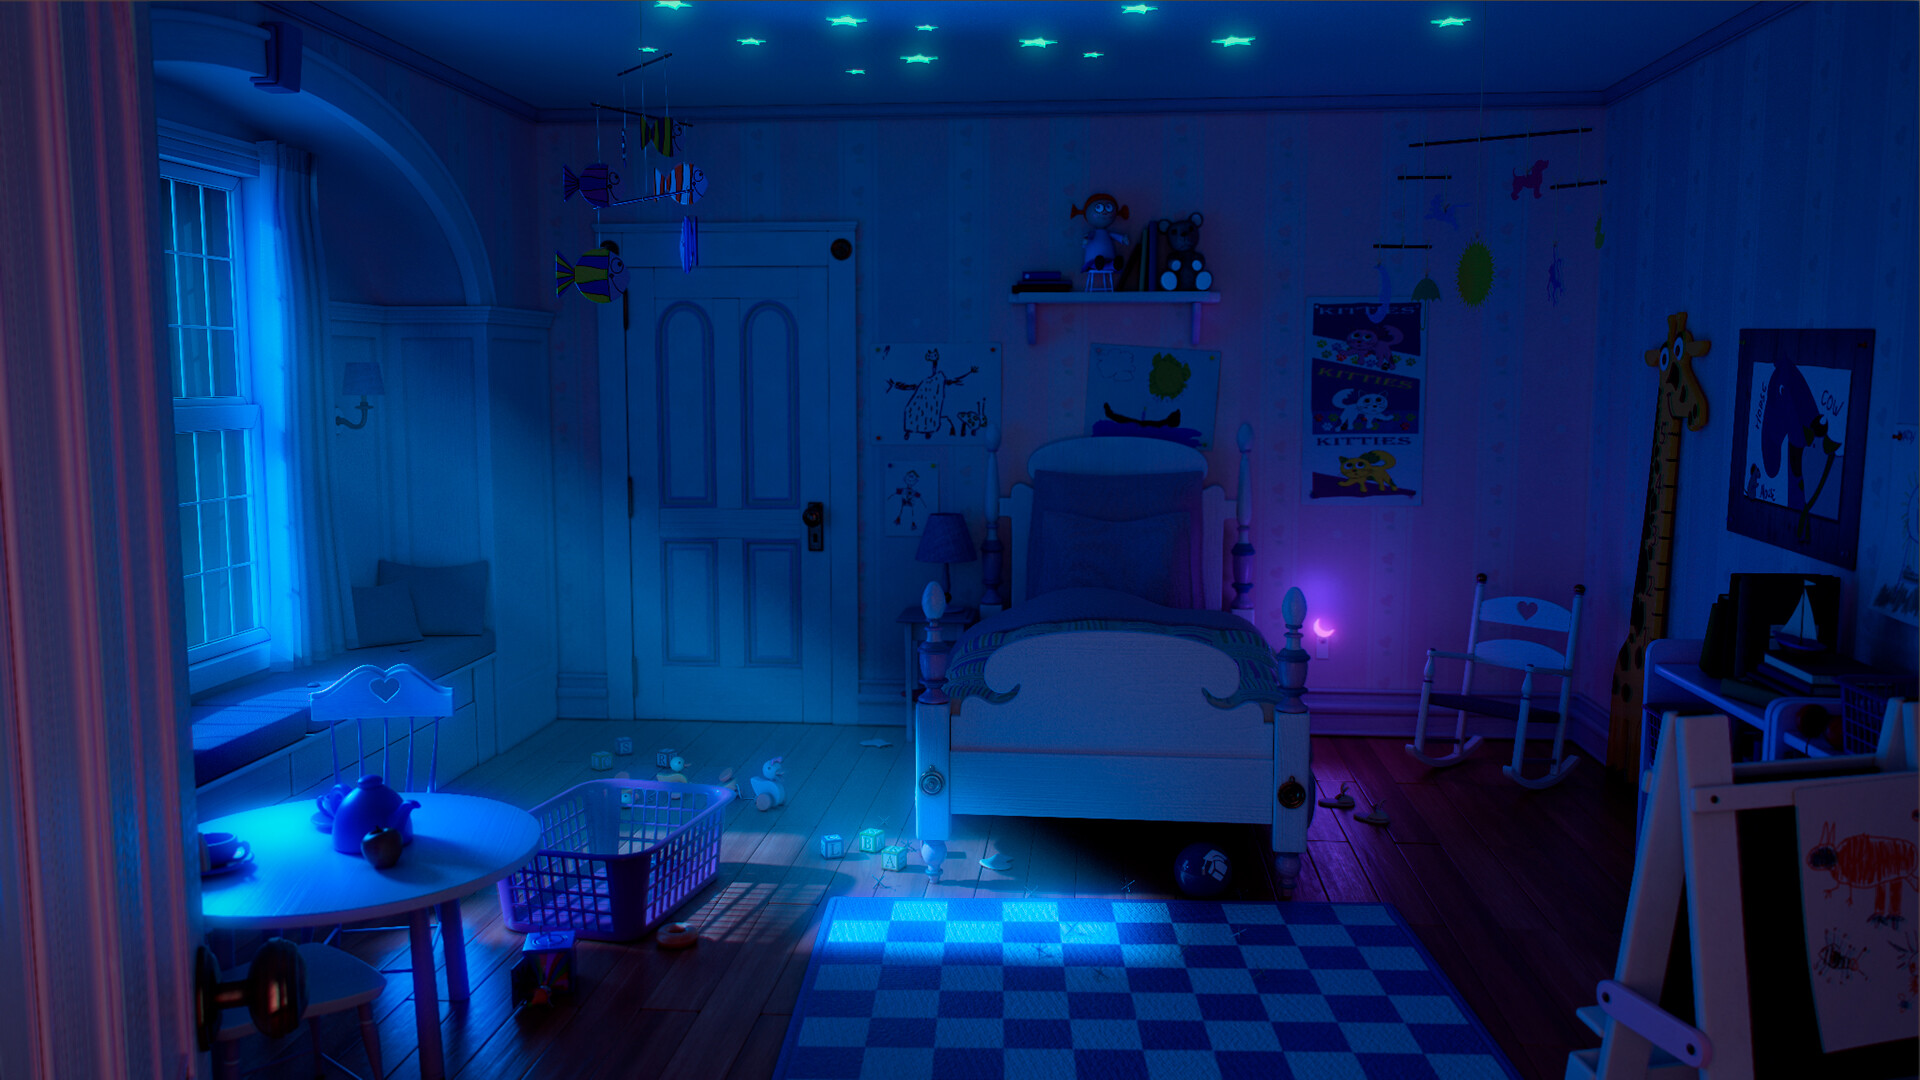 César Hernández - Boo's room (Monsters Inc.)